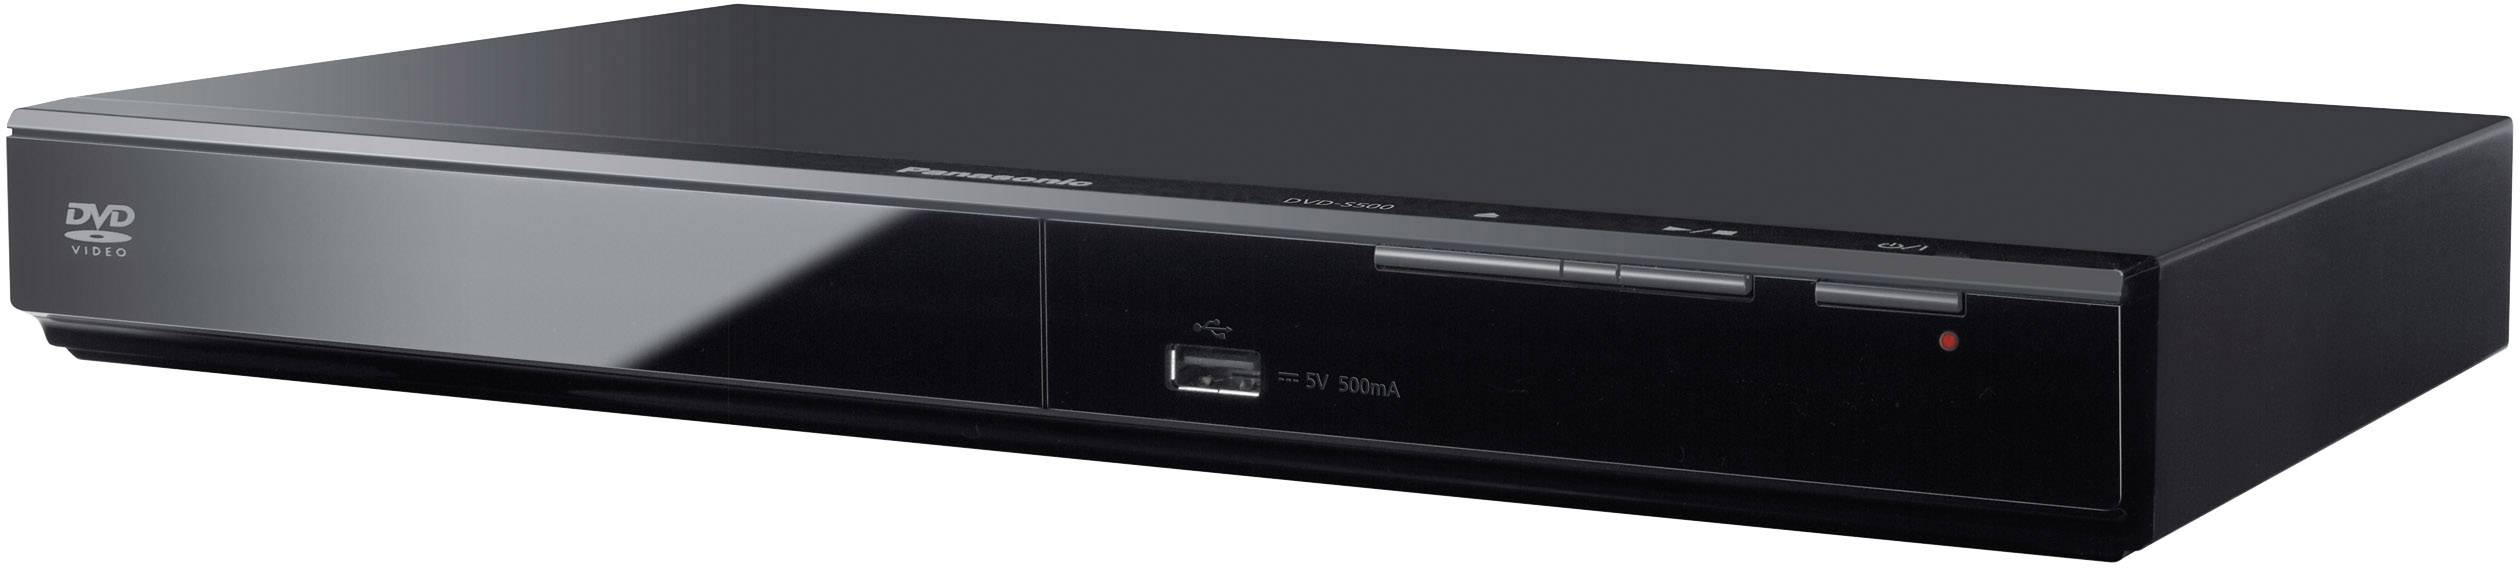 Panasonic DVD-S500 DVD player Black | Conrad.com